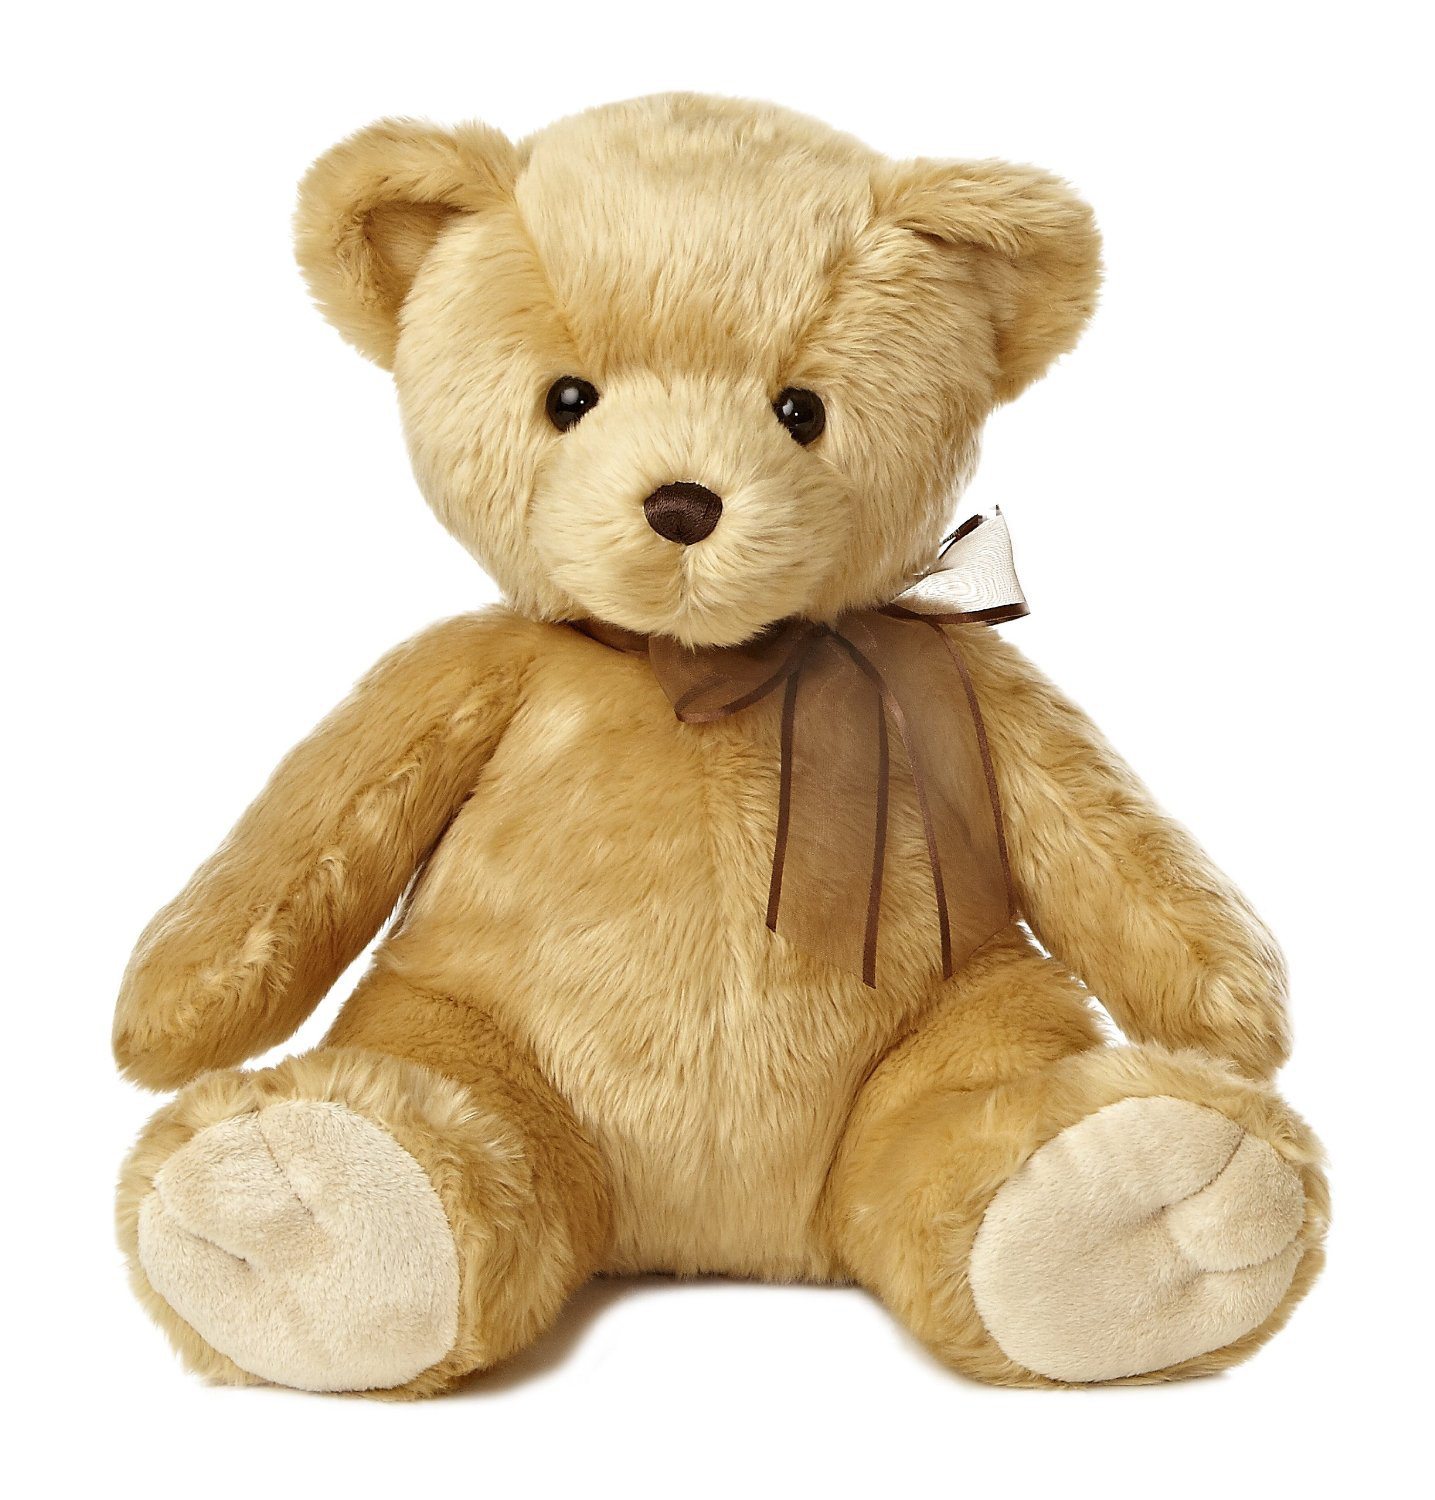 Toys медведь. Мягкая игрушка Aurora медведь Тедди 36 см. Plush Toys игрушка мягконабивная медведь. Медведь плюшевая игрушка Тэдди. Плюшевые игрушки без фона.